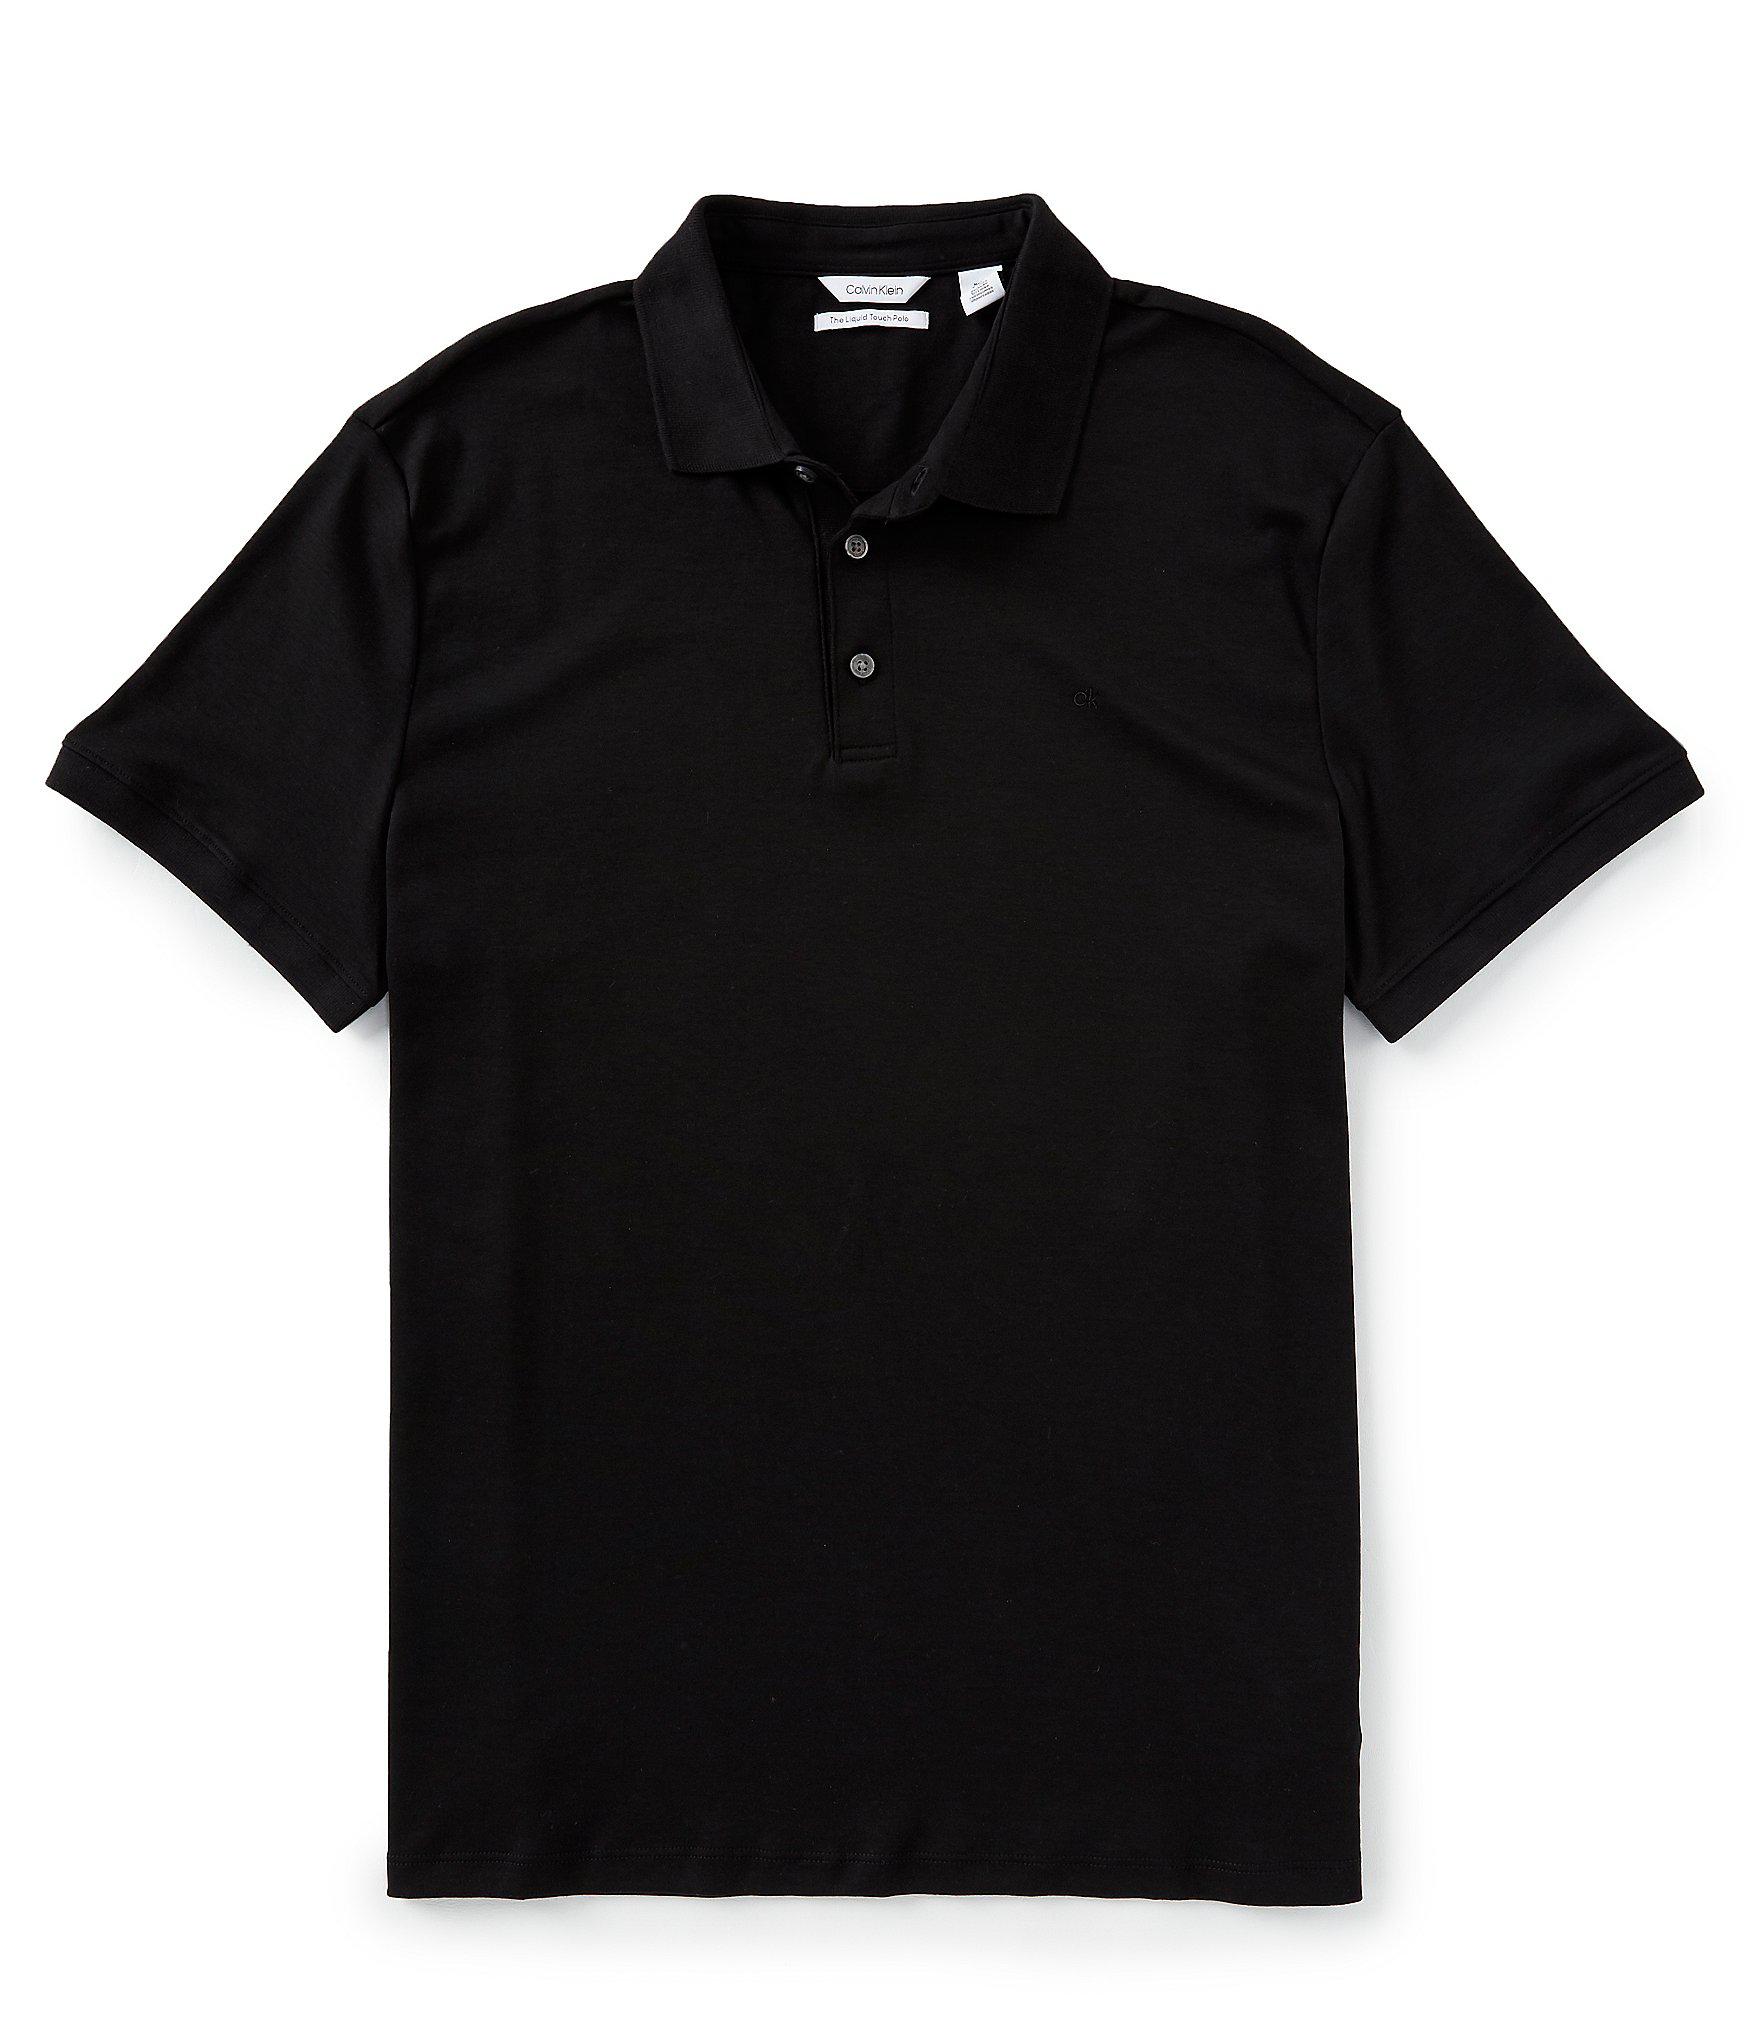 Lyst - Calvin Klein Liquid Touch Short-sleeve Polo Shirt in Black for Men